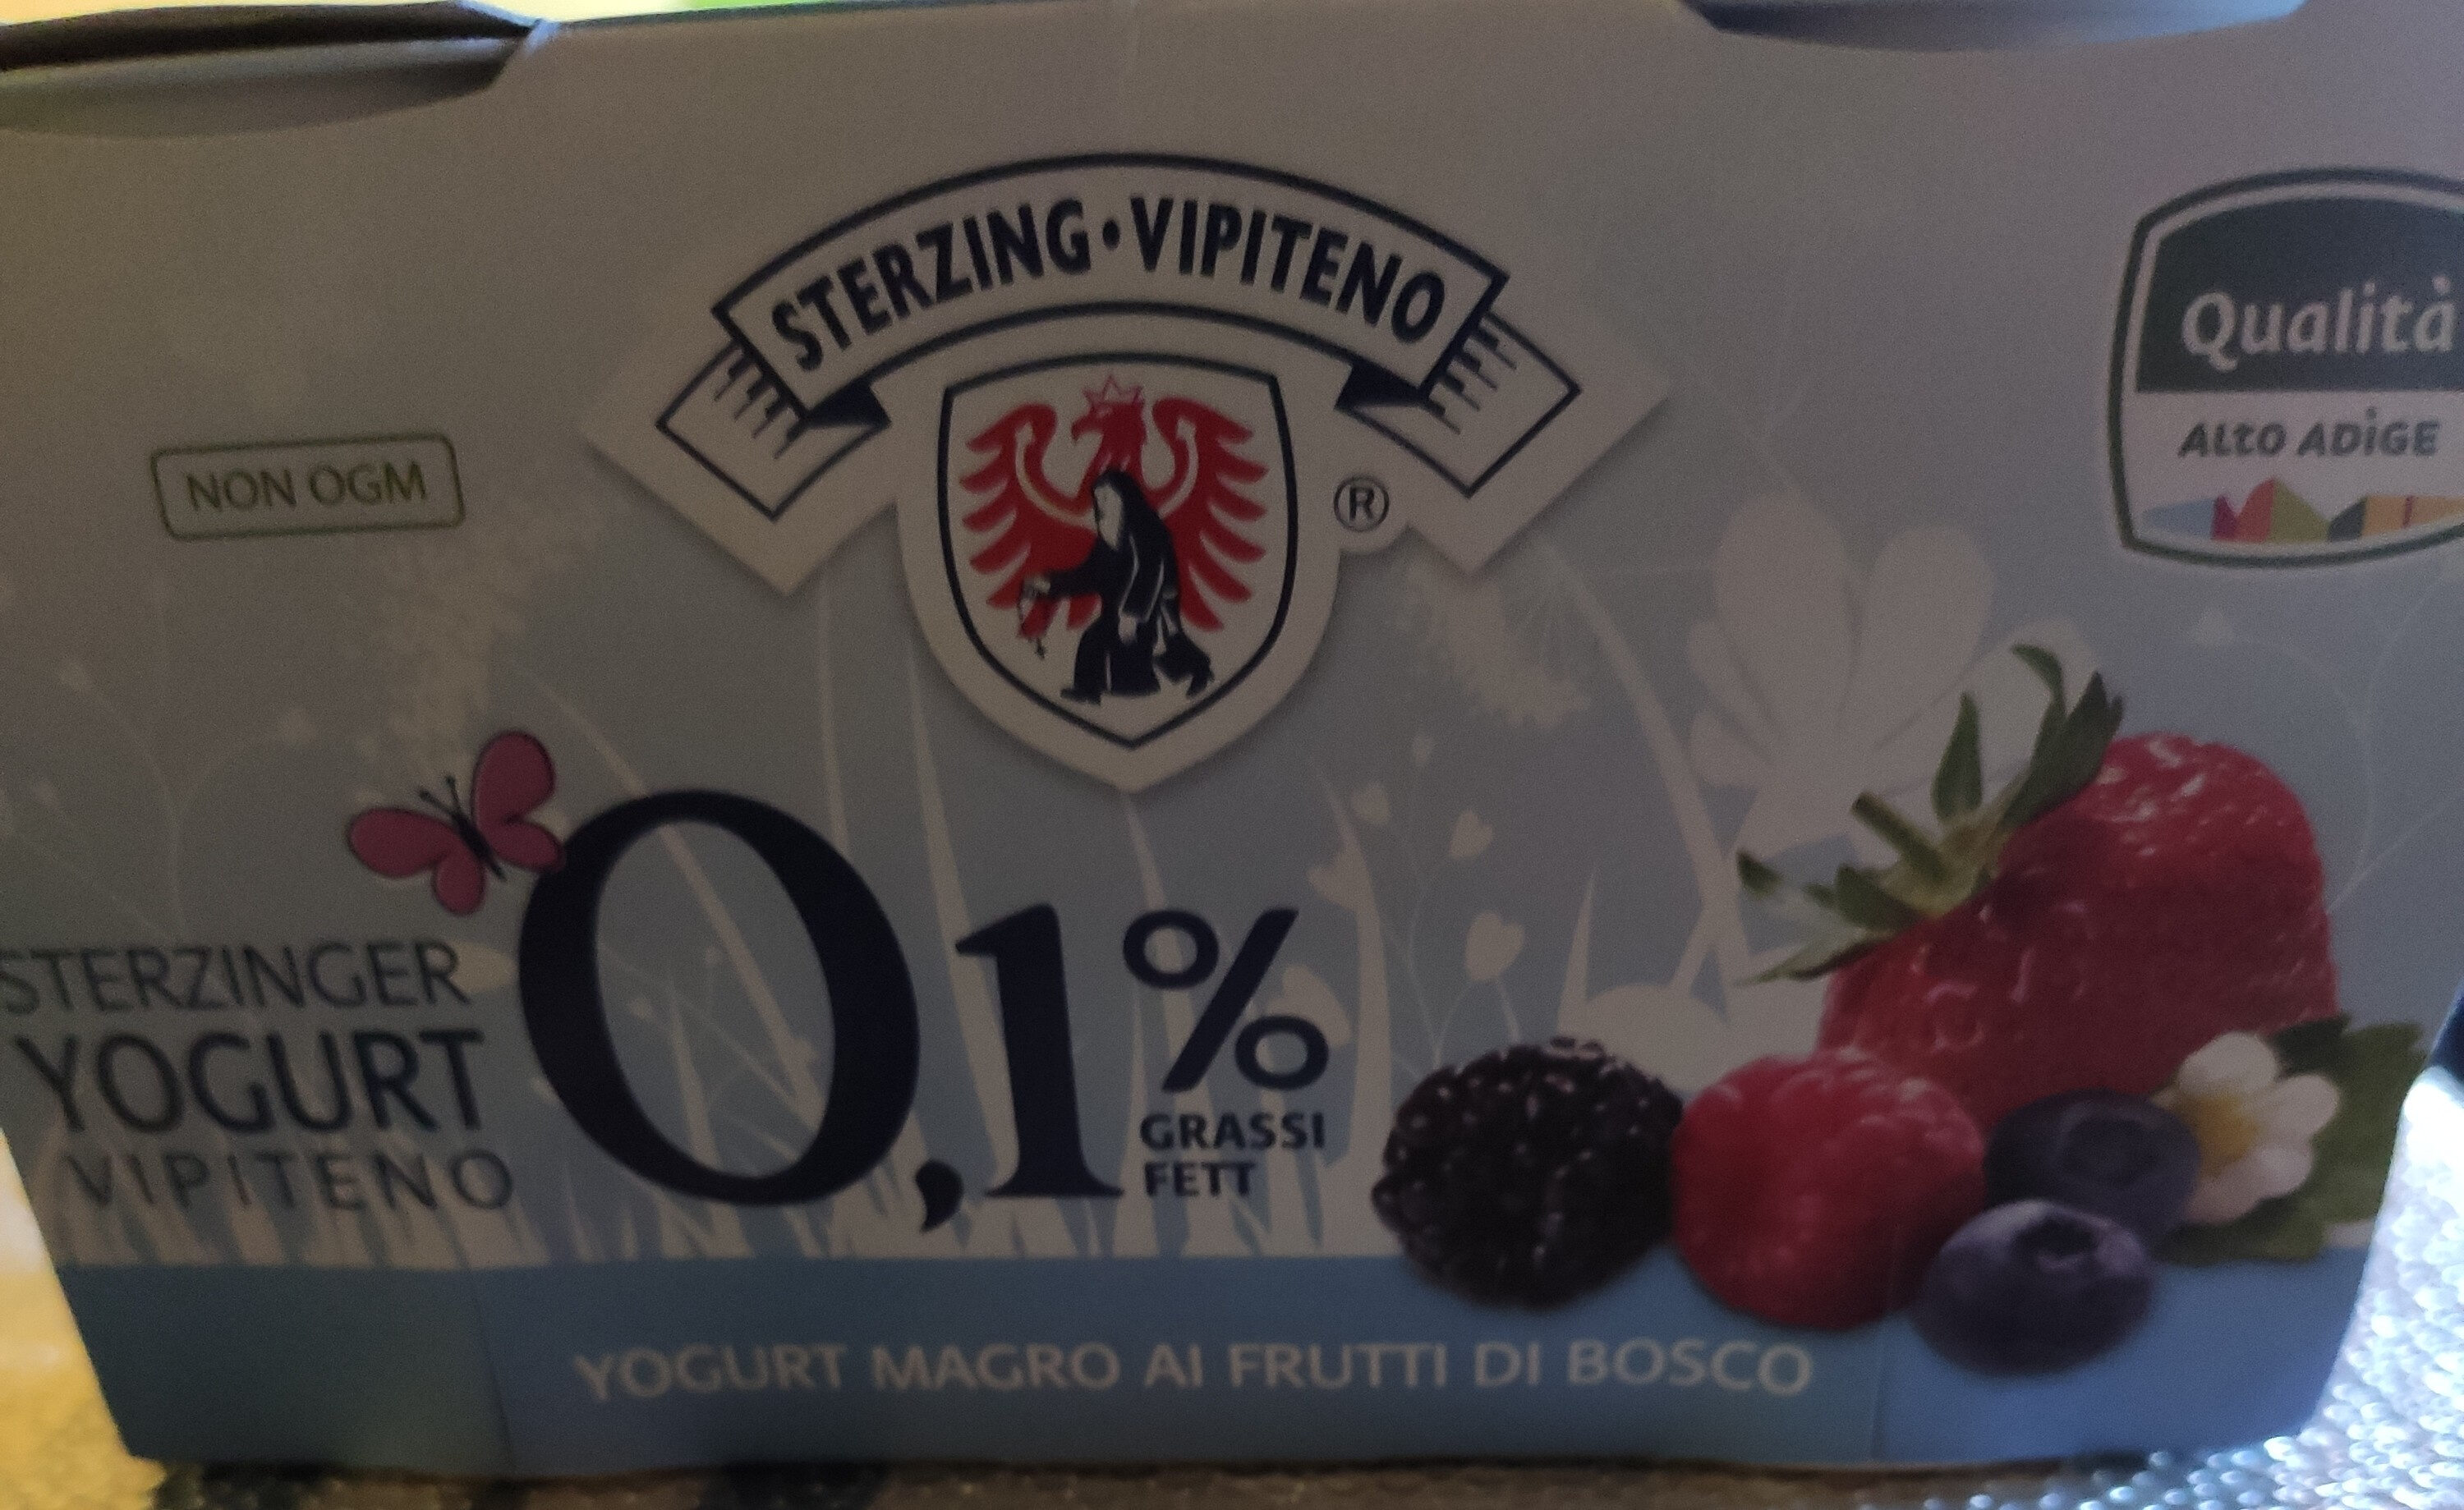 Yogurt magro ai Frutti di Bosco - Ingredients - it